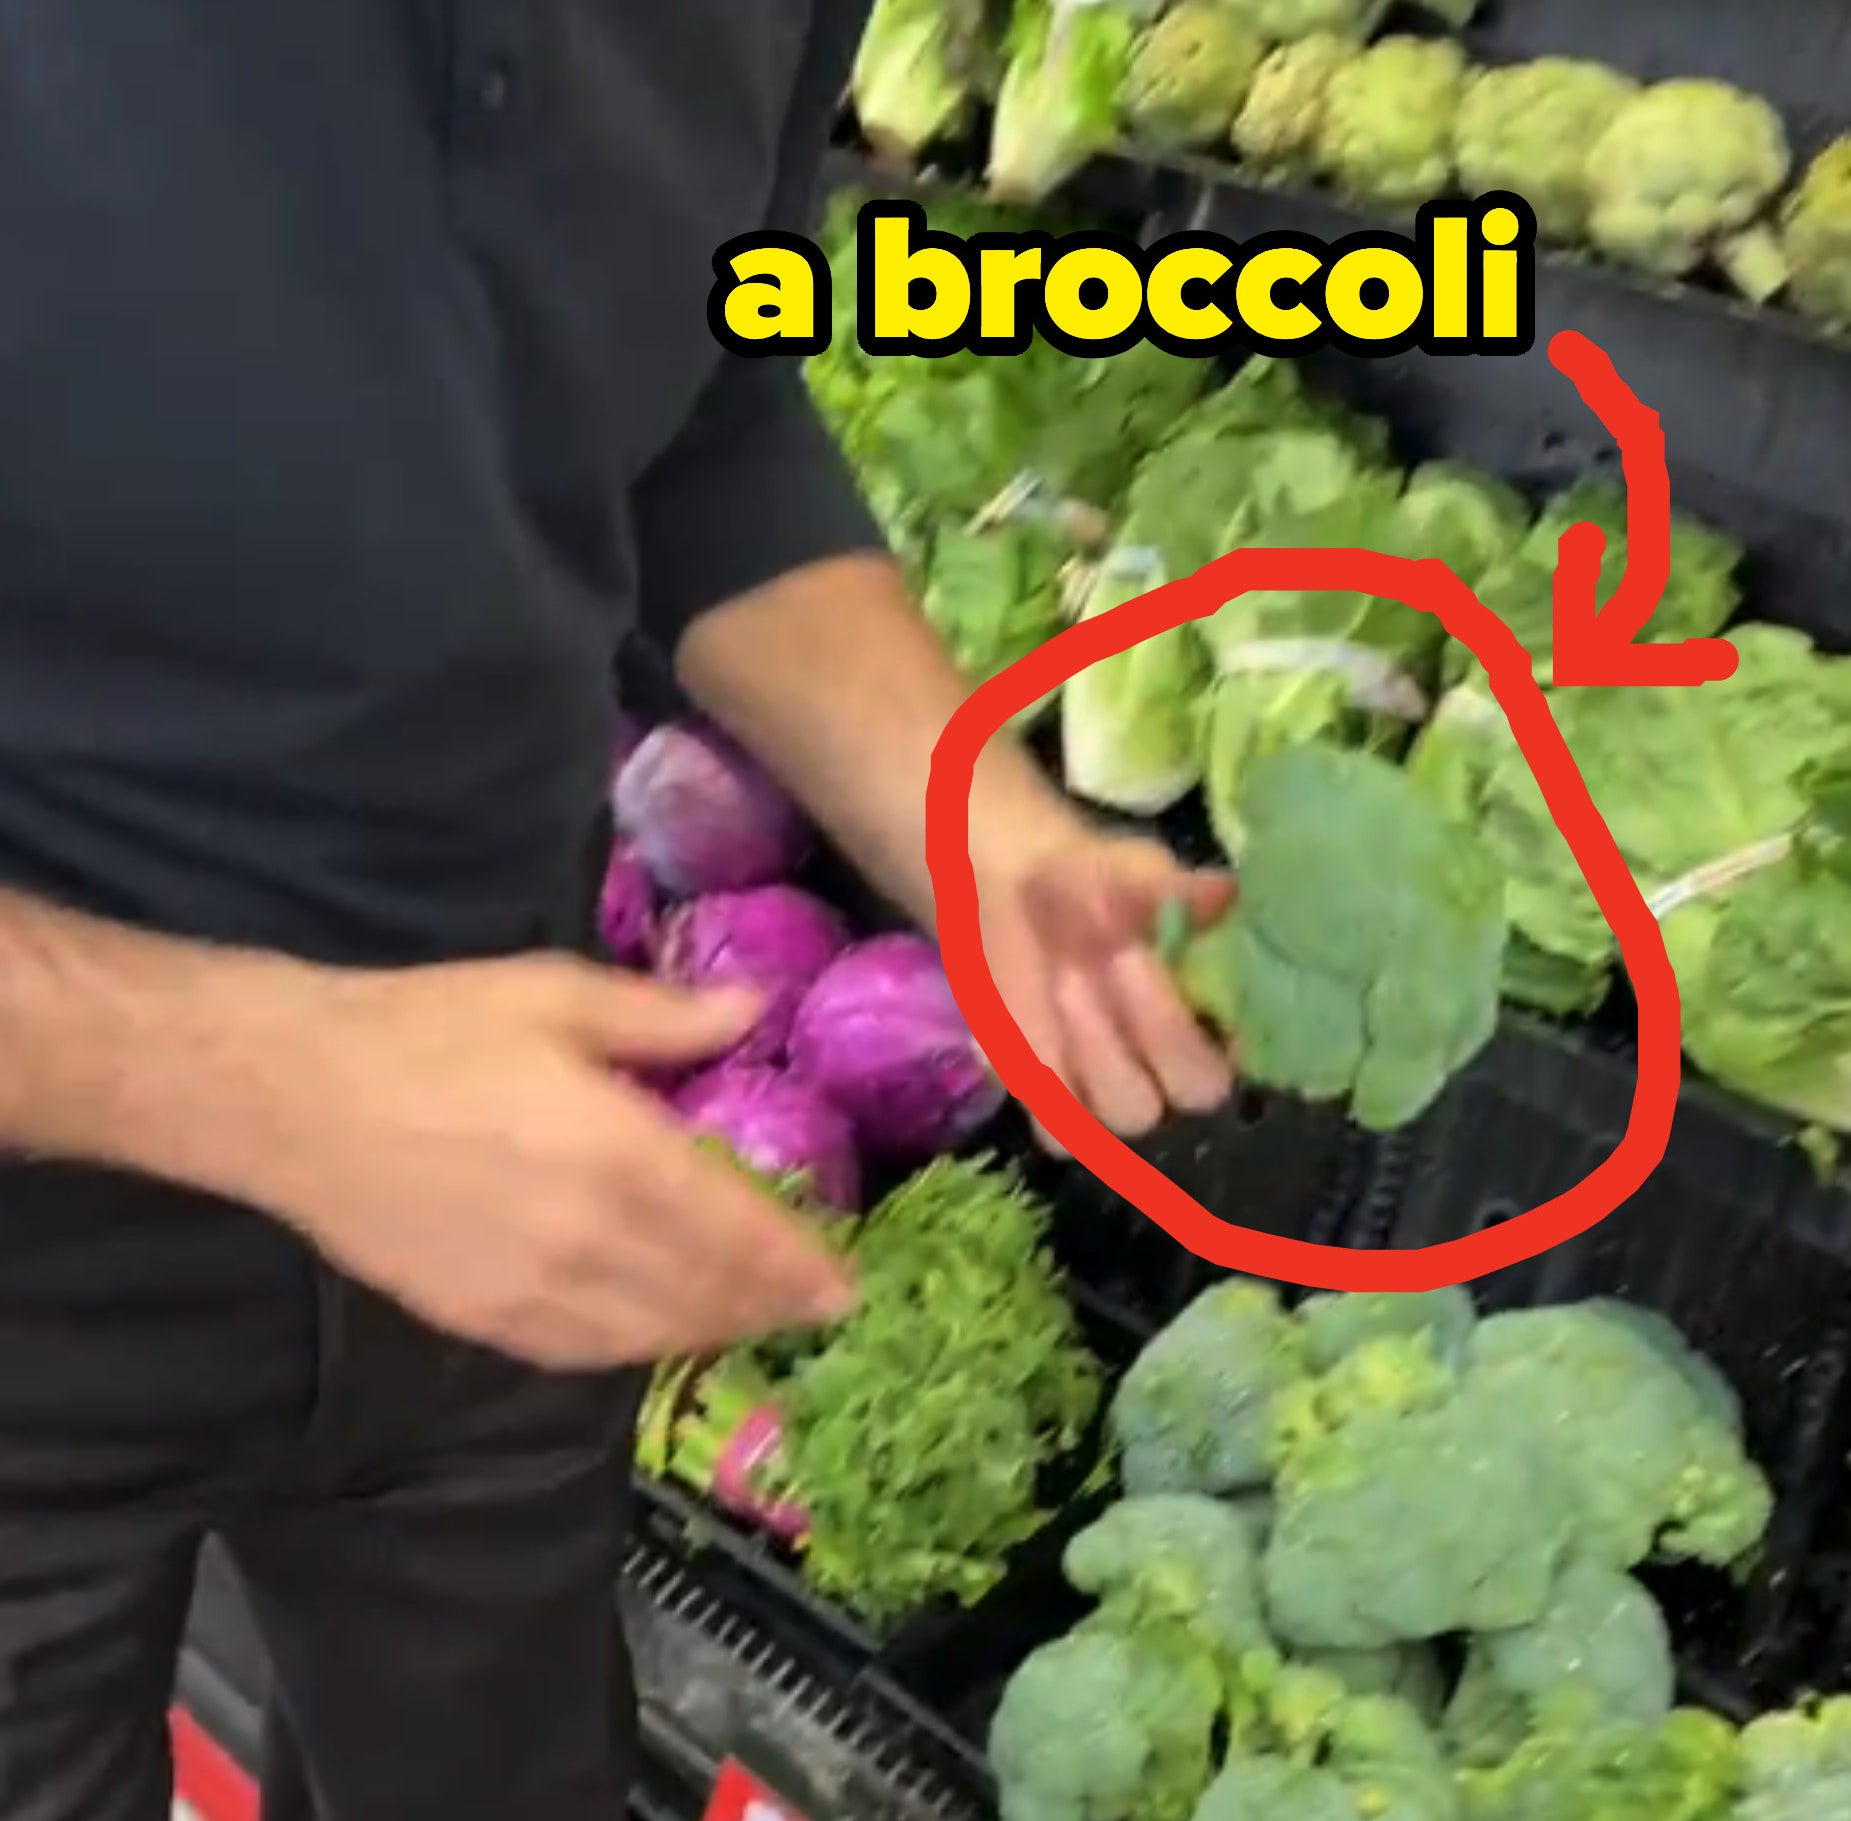 Oz holding broccoli